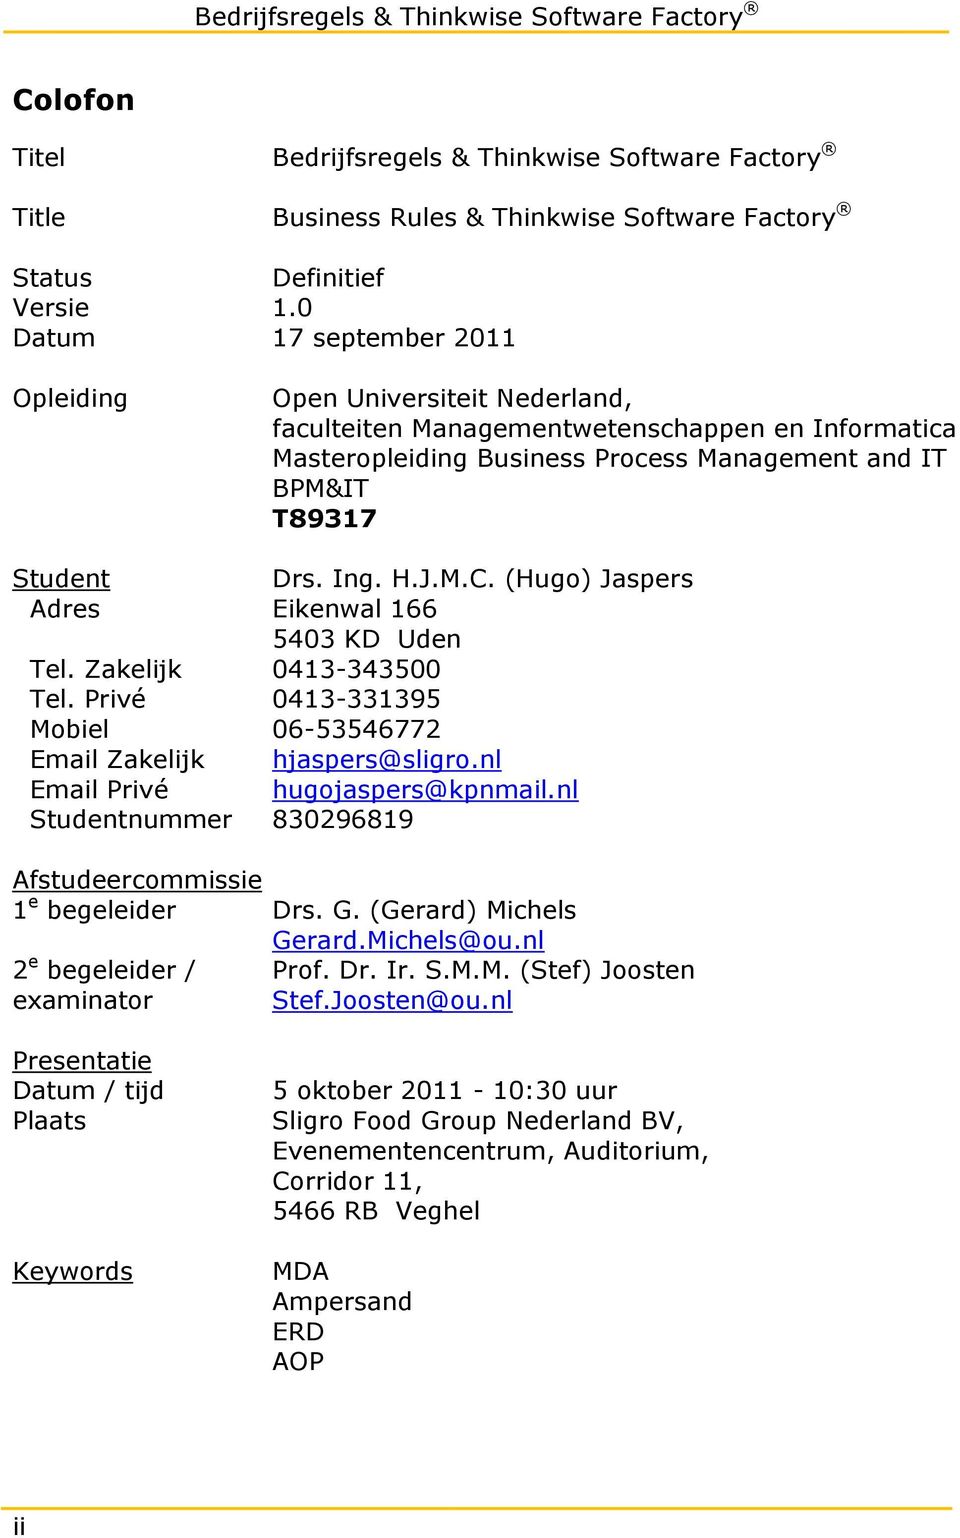 Privé Mobiel Email Zakelijk Email Privé Studentnummer Open Universiteit Nederland, faculteiten Managementwetenschappen en Informatica Masteropleiding Business Process Management and IT BPM&IT T89317